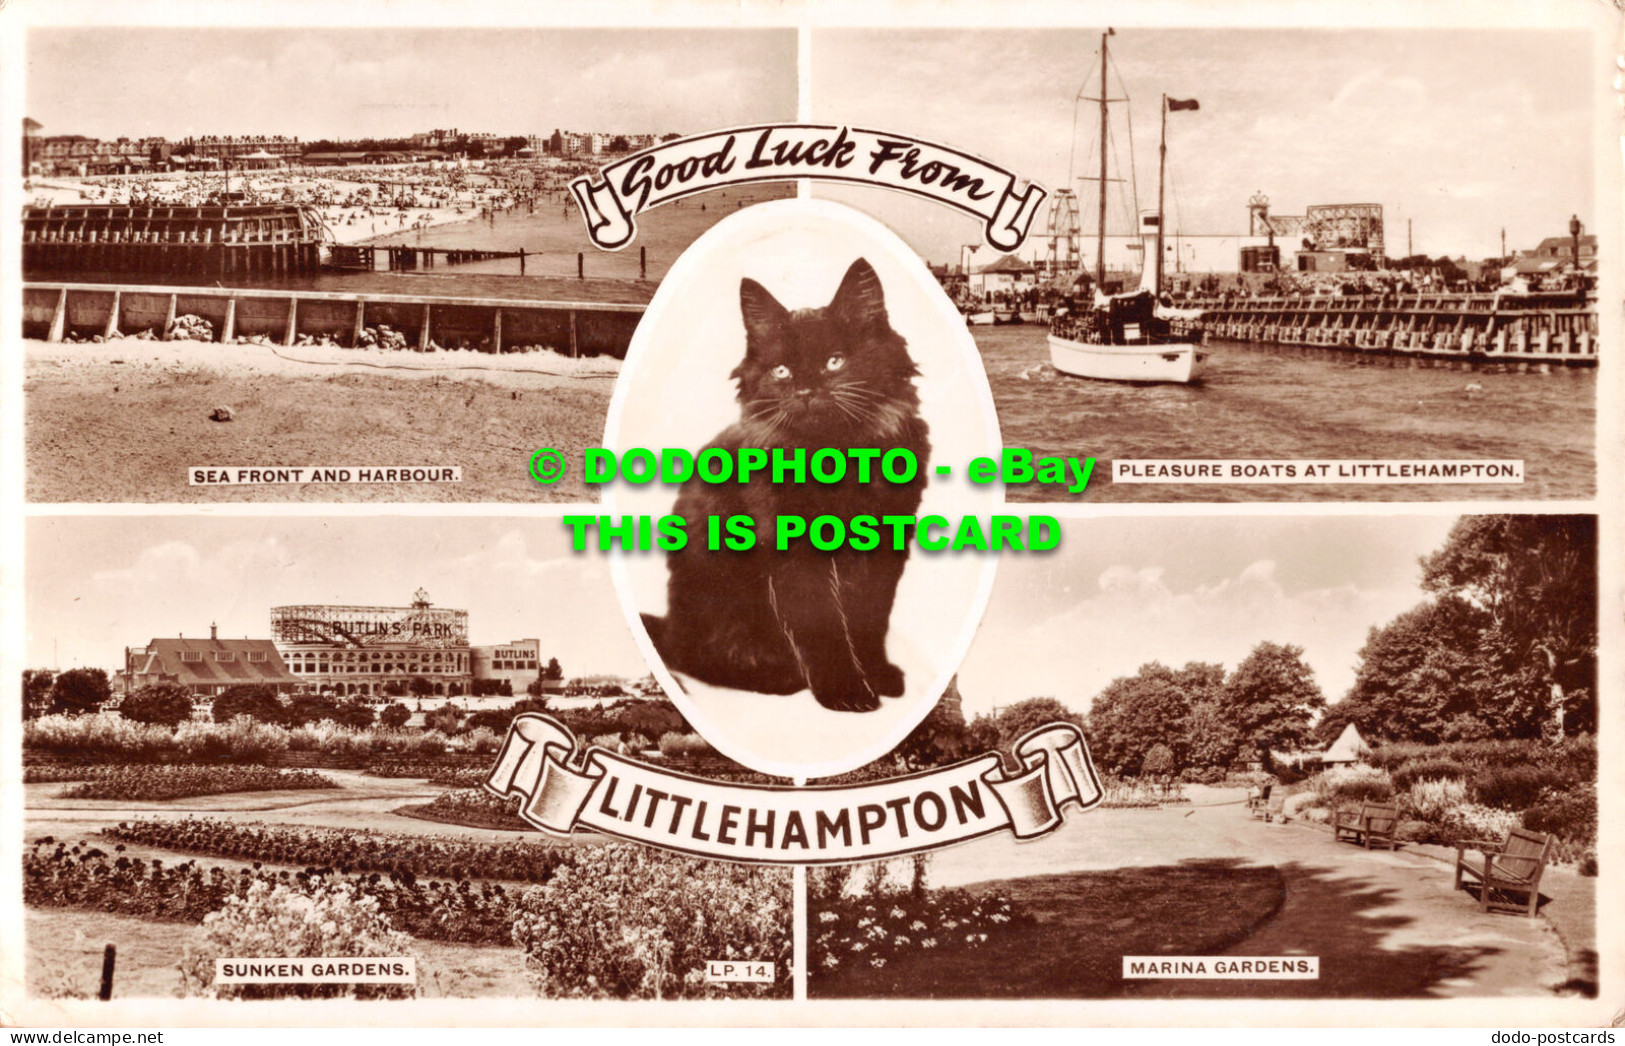 R485311 Good Luck From Littlehampton. Cat. LP. 14. Lansdowne Production. RP. 195 - Mondo